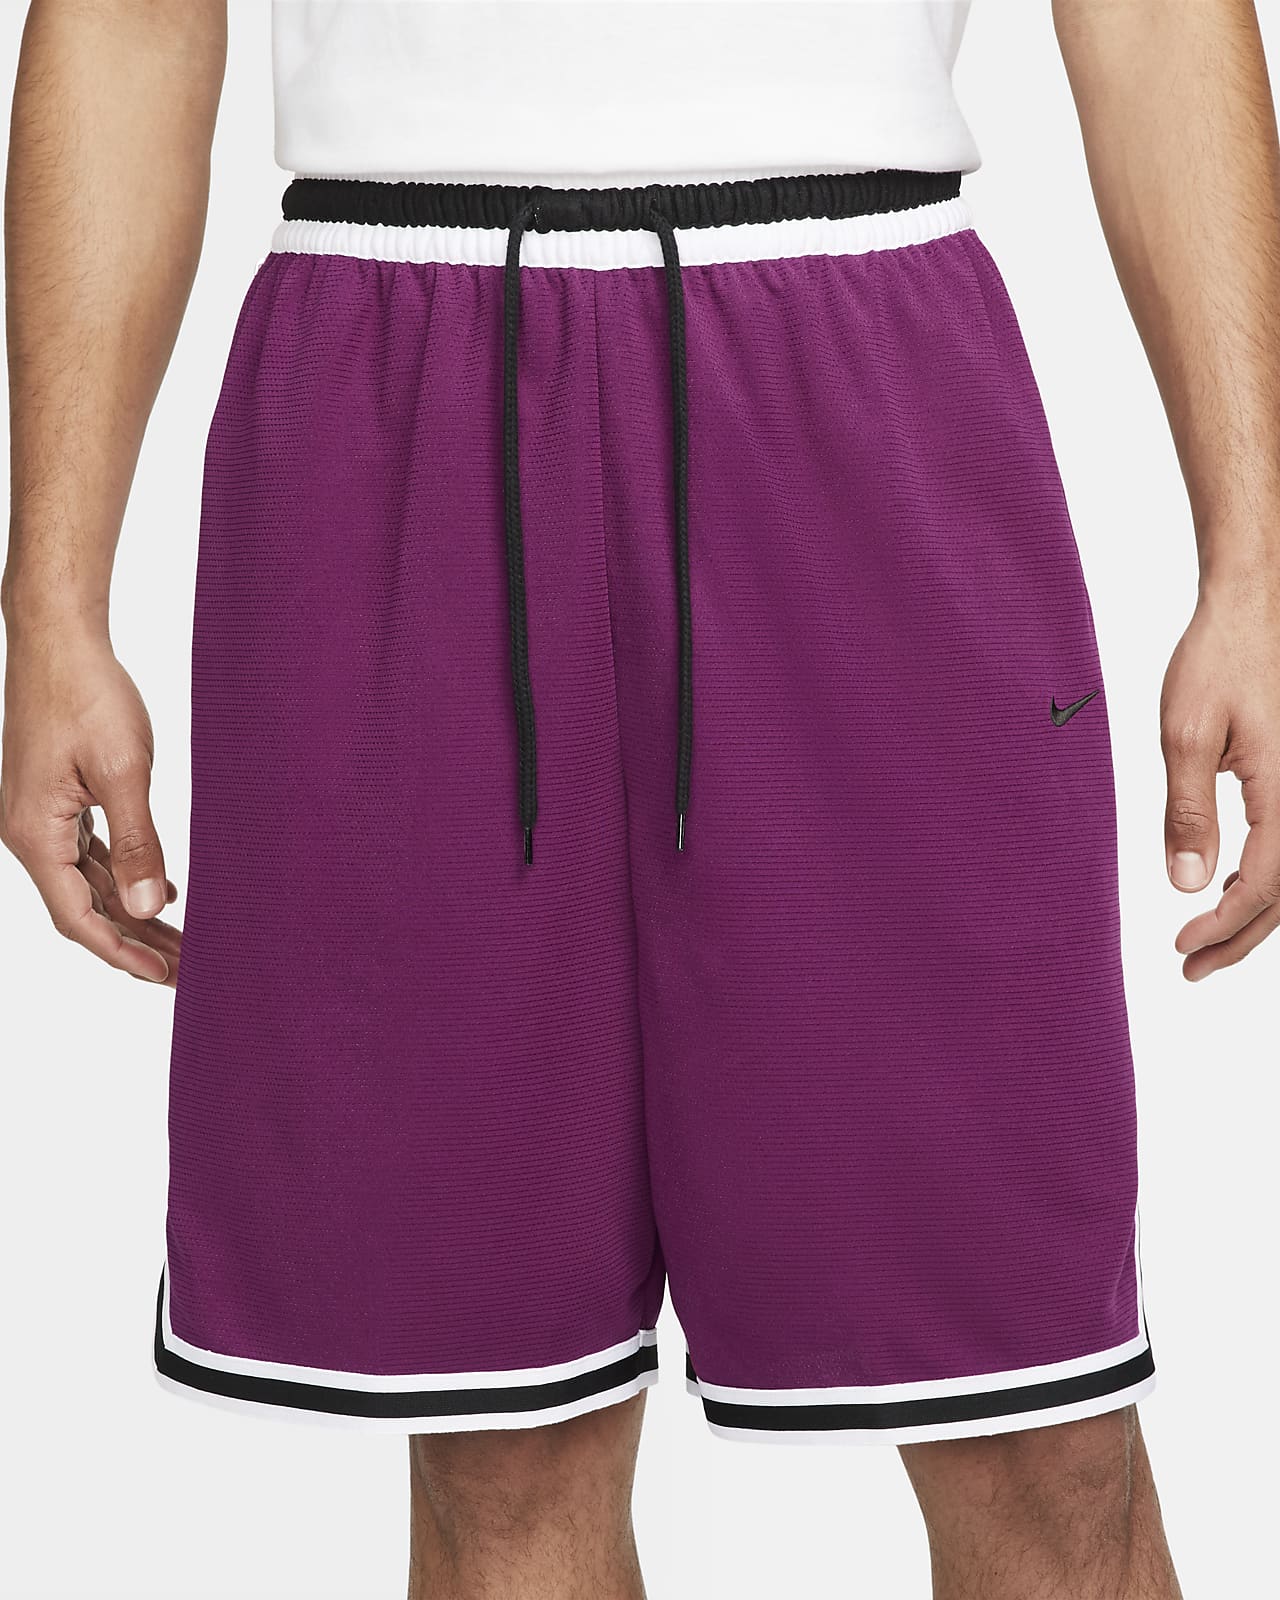 Nike Dri-FIT DNA Men's Basketball Jersey.